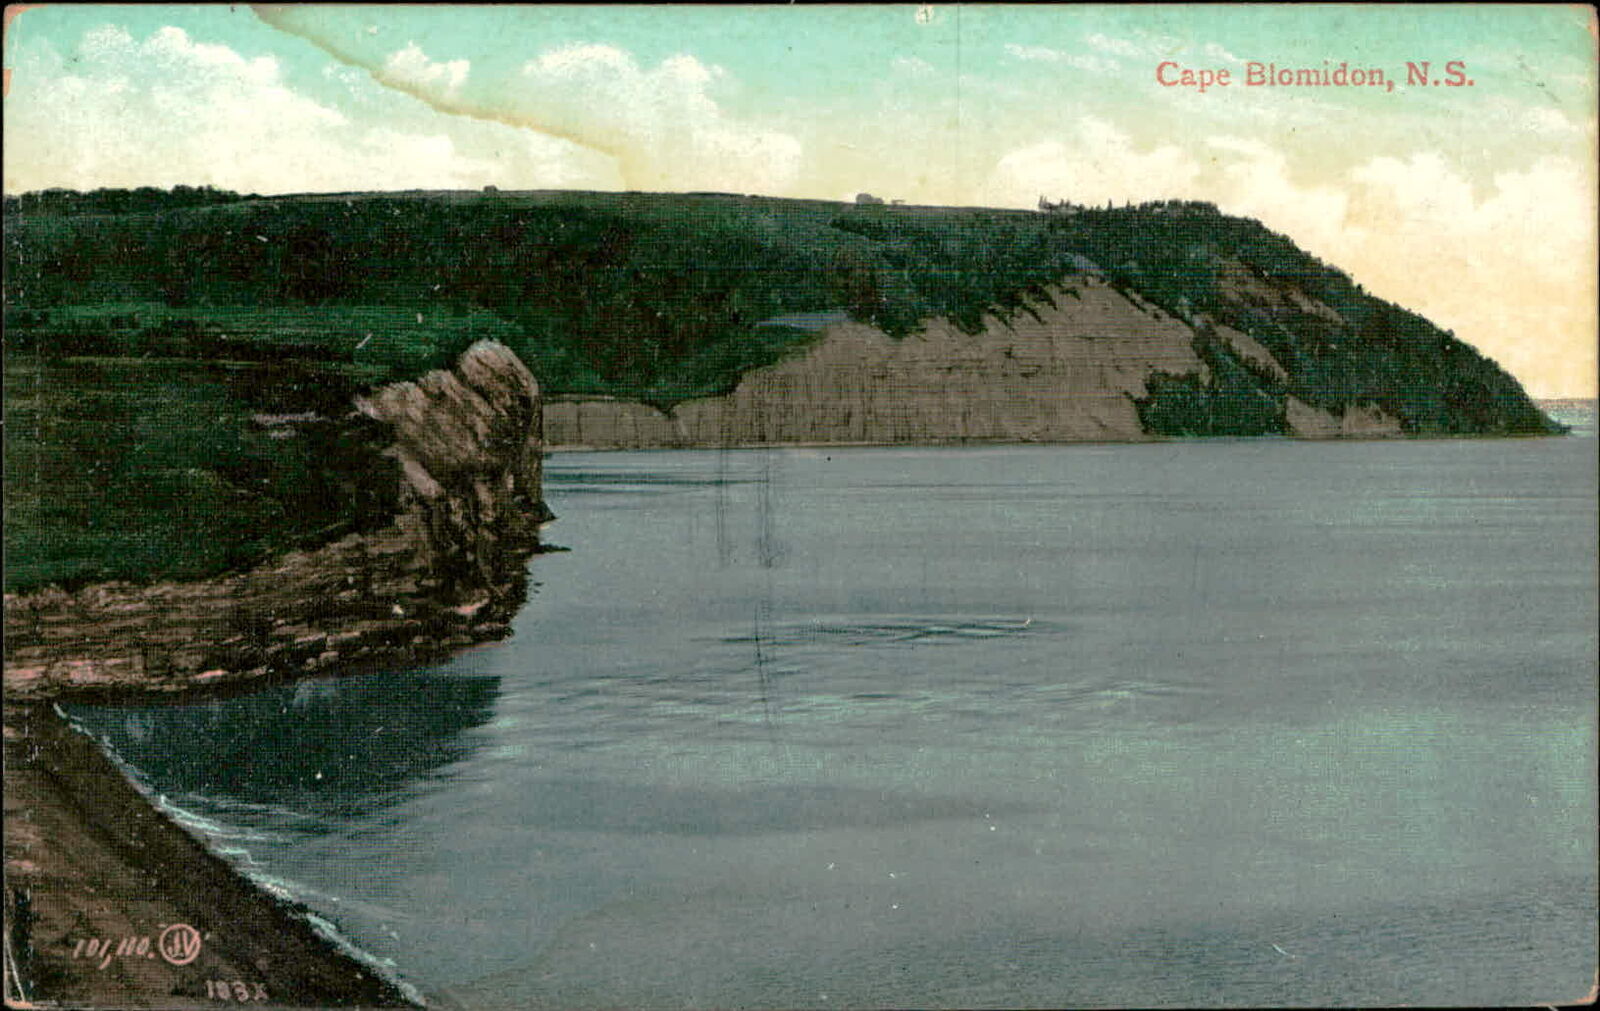 Postcard: 1933 Cape Blomidon, N.S.